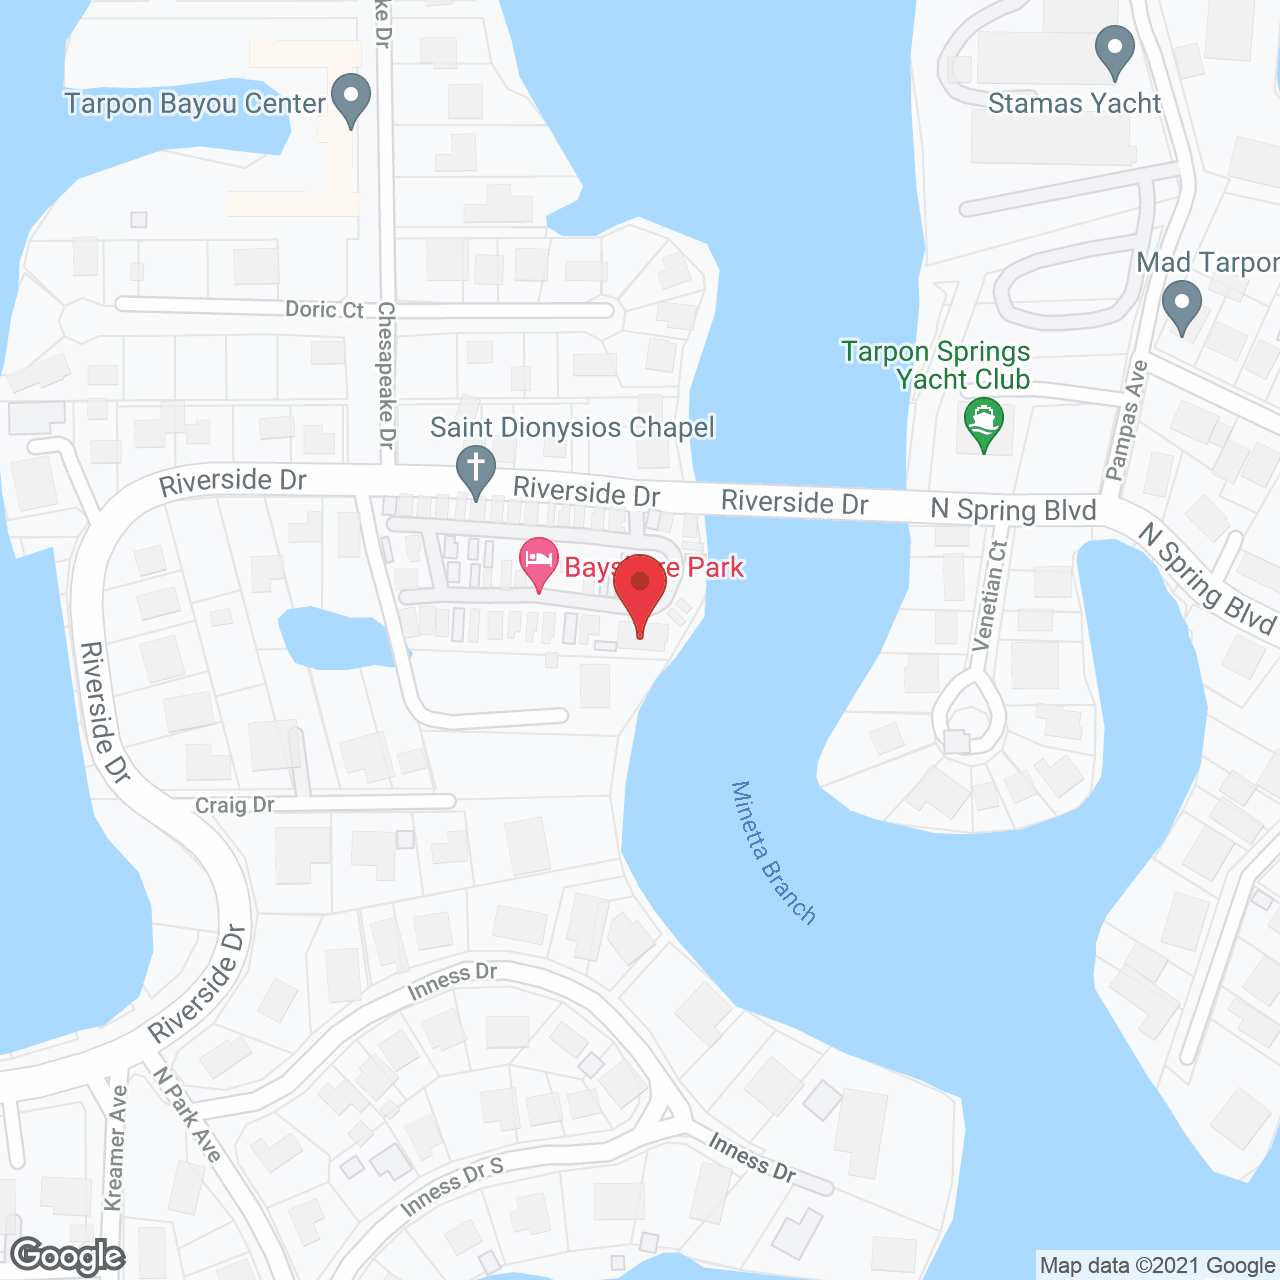 Bayshore Park Inc in google map